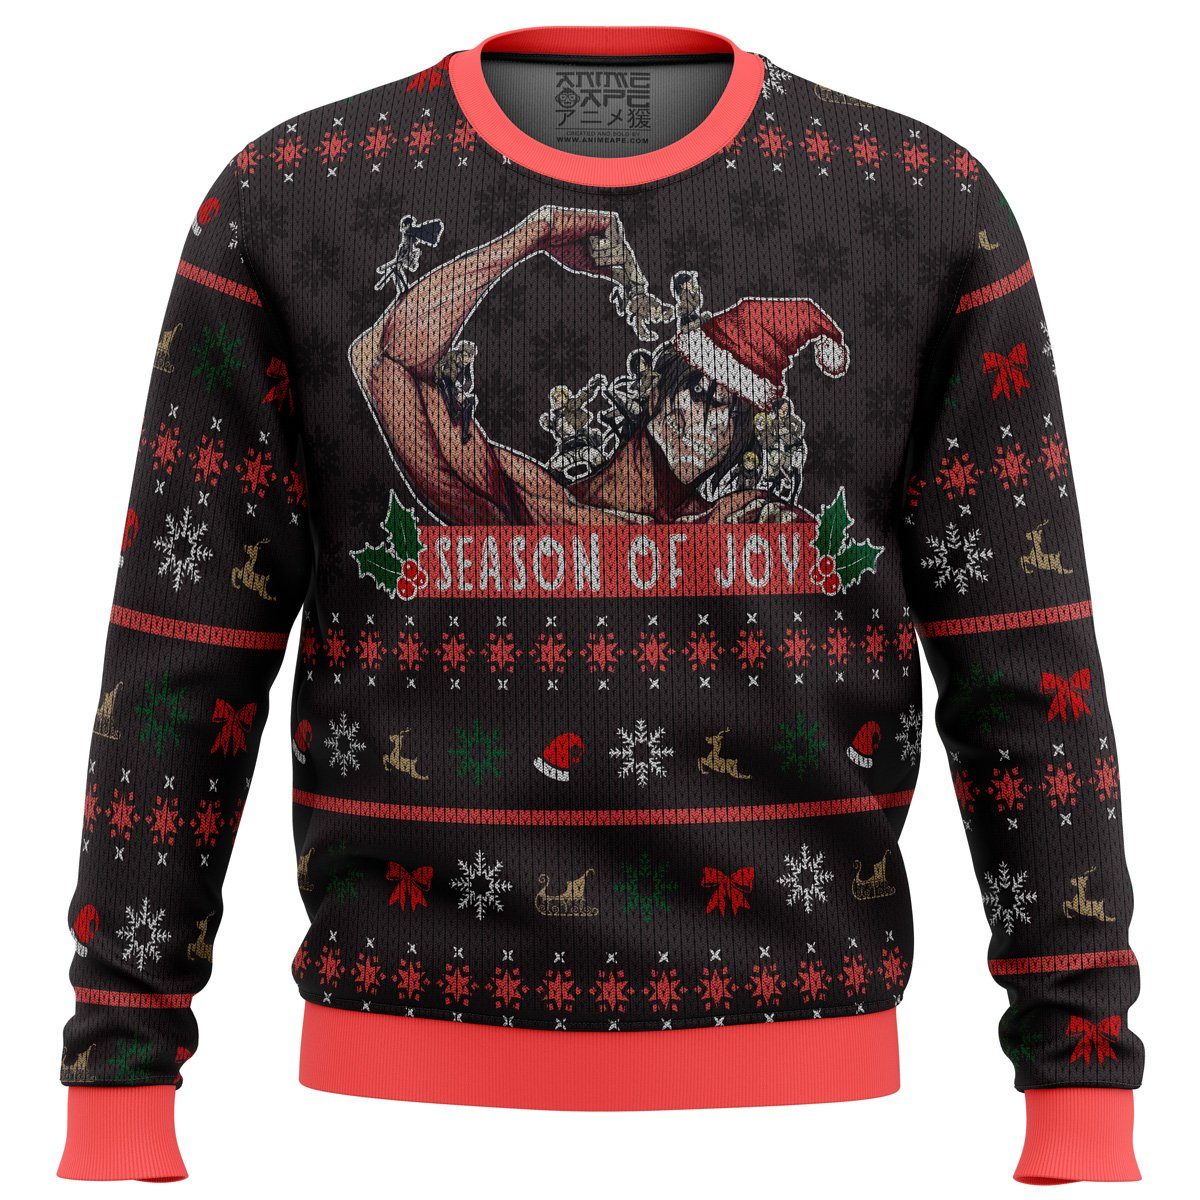 season of joy attack on titan premium ugly christmas sweater 630203 - Attack On Titan Shop